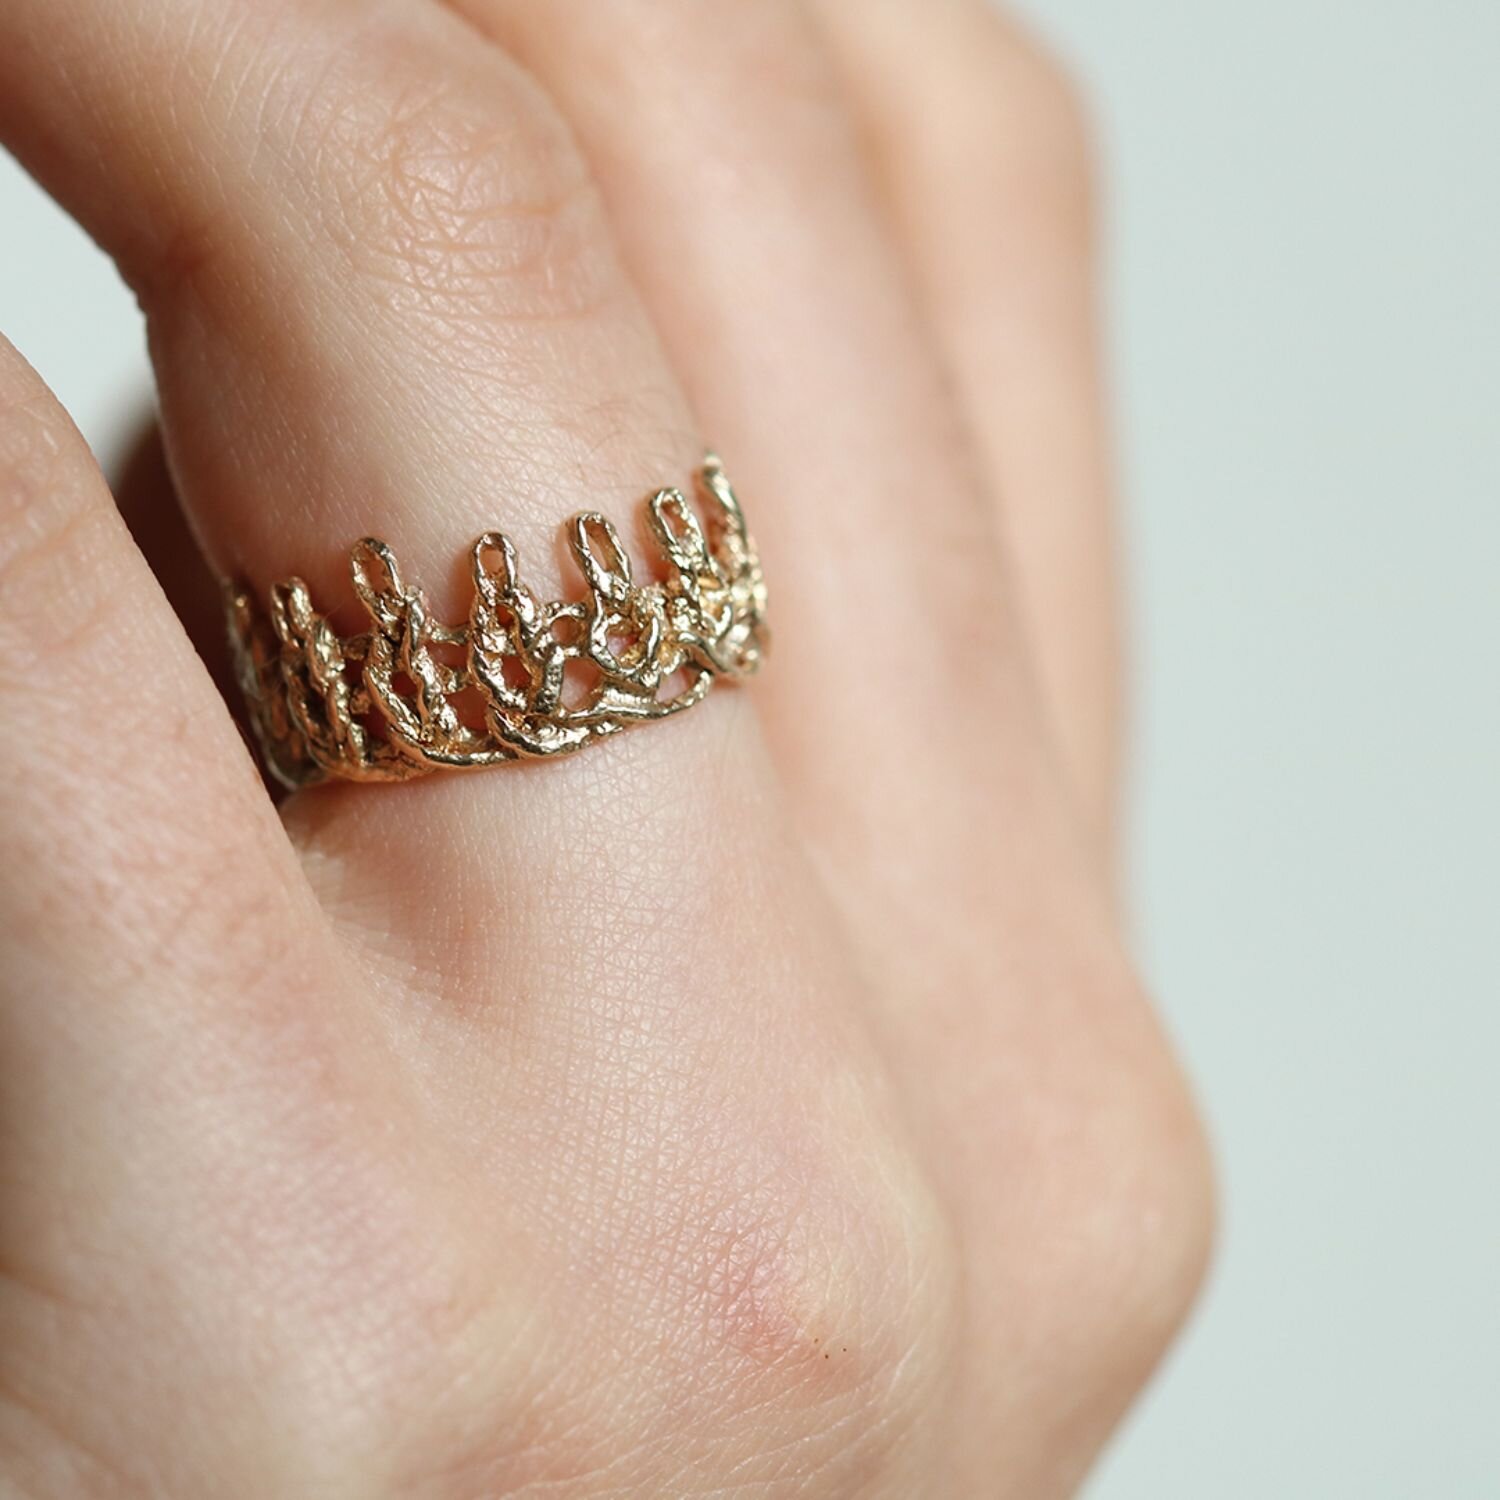 Rosalyn Faith - knitted Ring.jpg